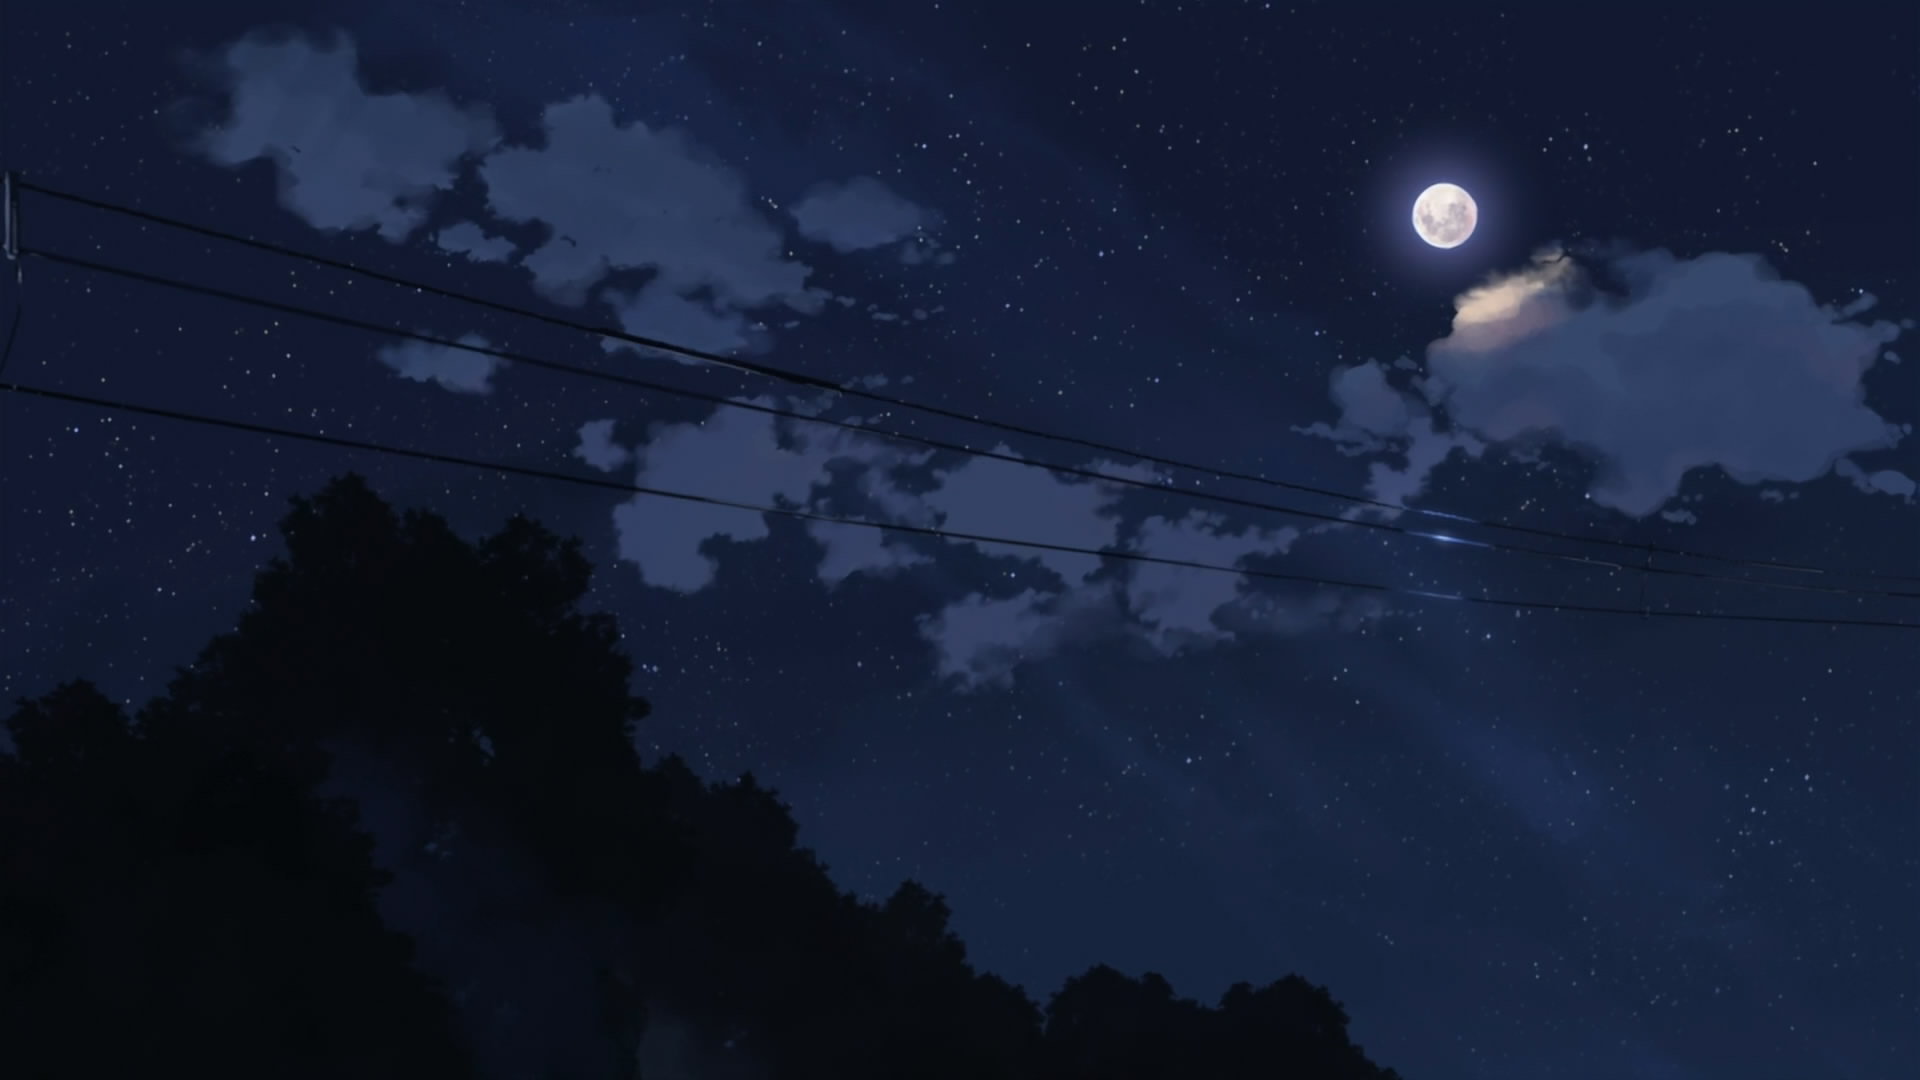 19+] Night Sky Anime Desktop Wallpapers - WallpaperSafari